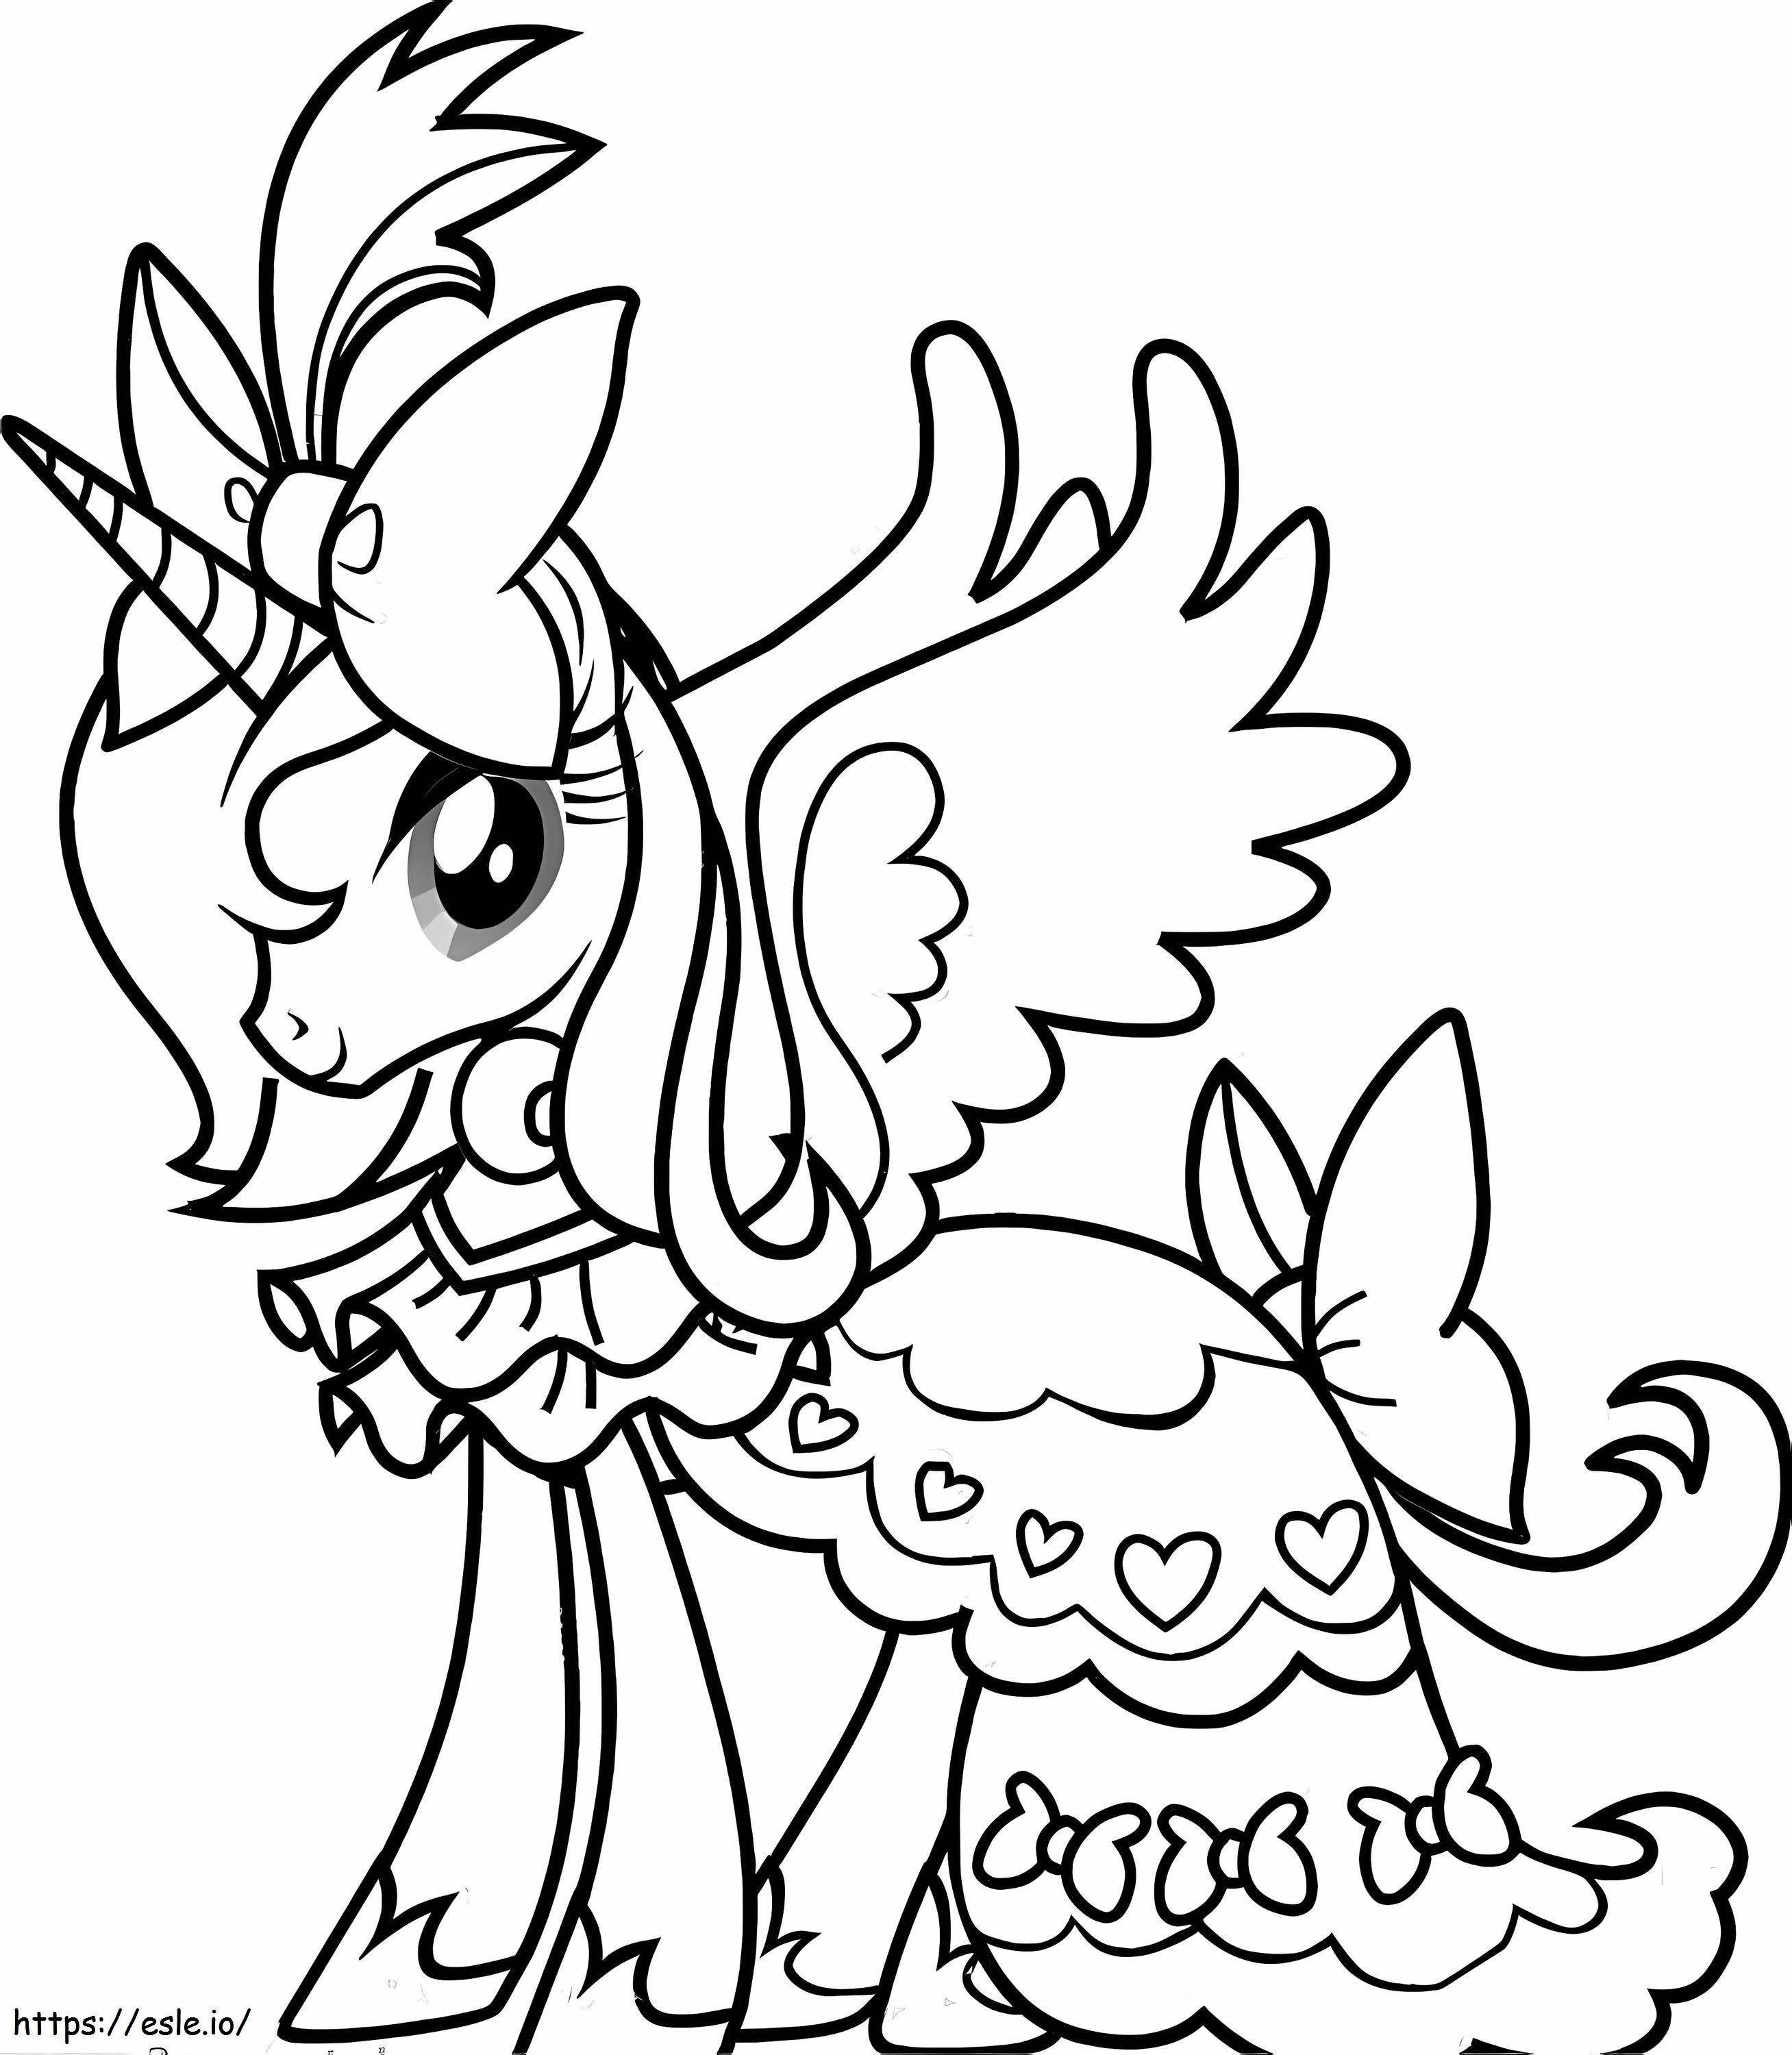 Pretty Winged Unicorn coloring page